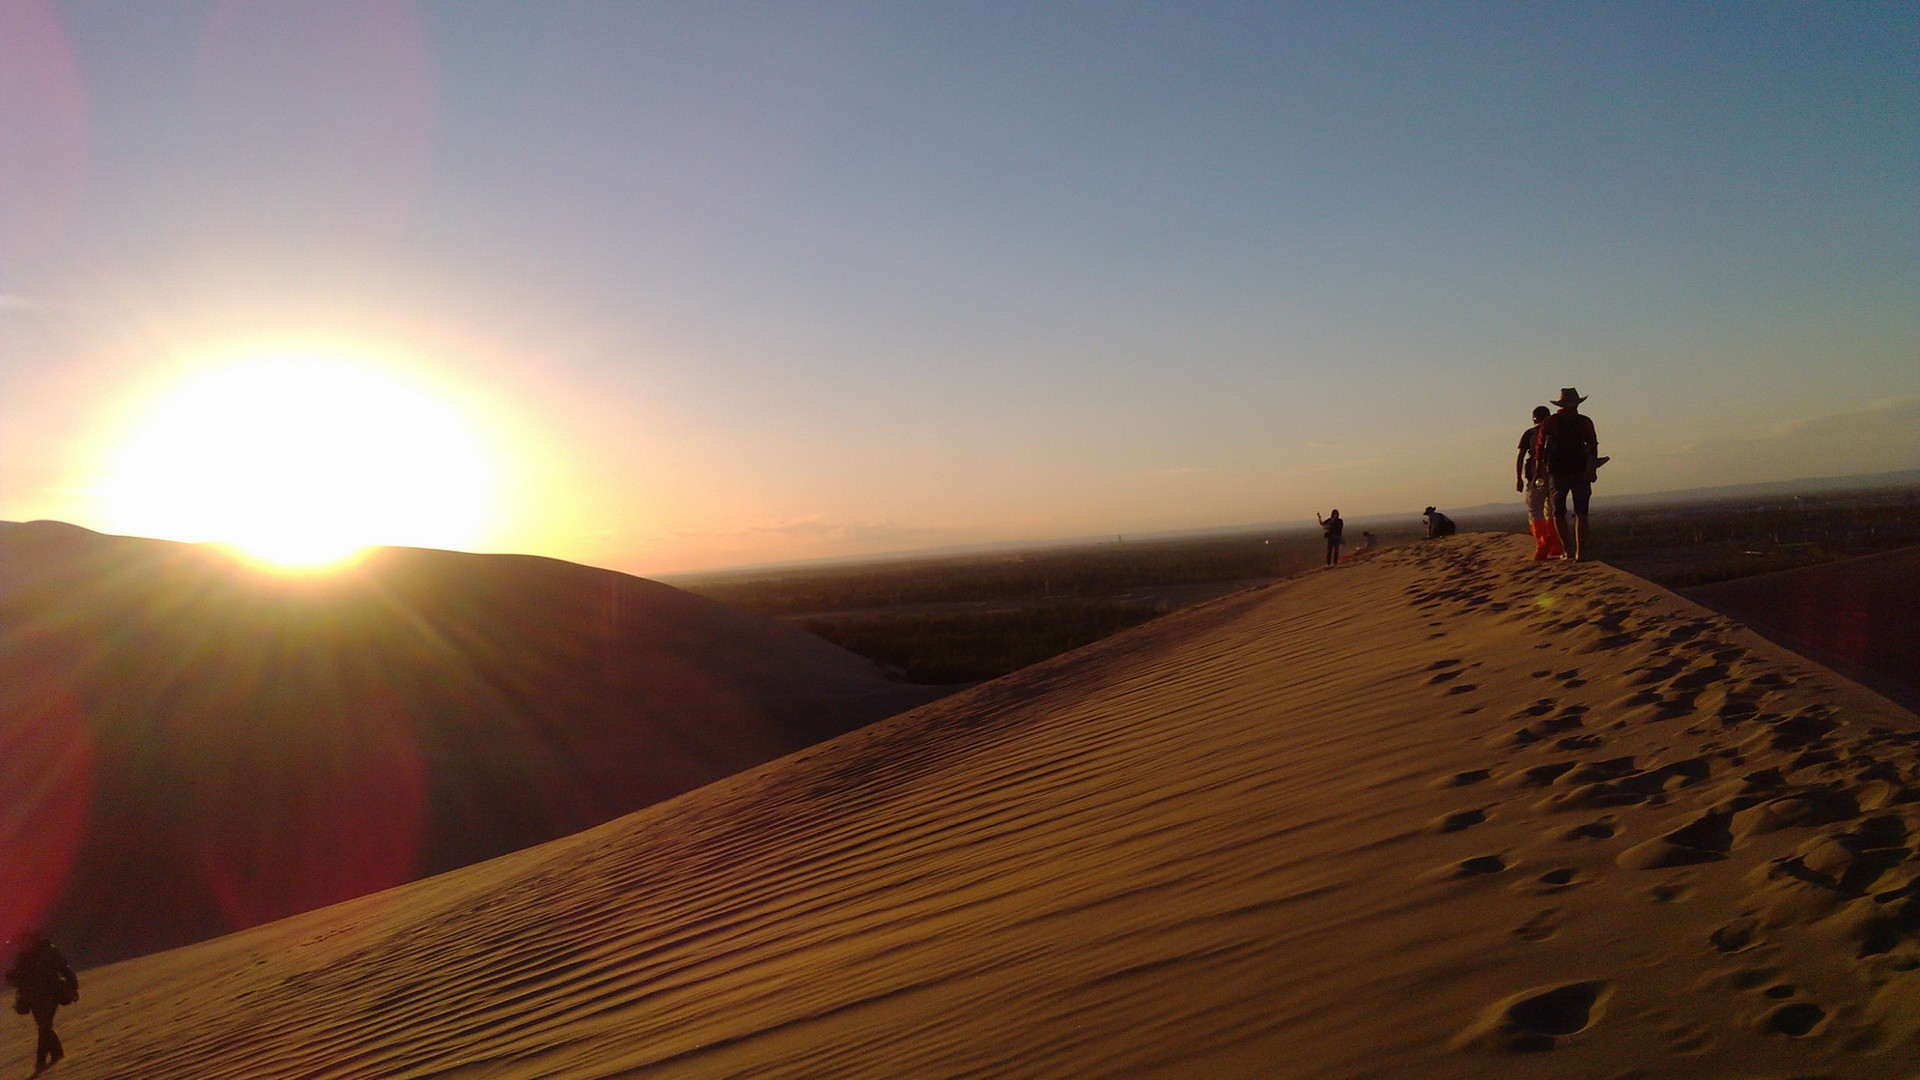 General 1920x1080 sunset people landscape dunes nature desert